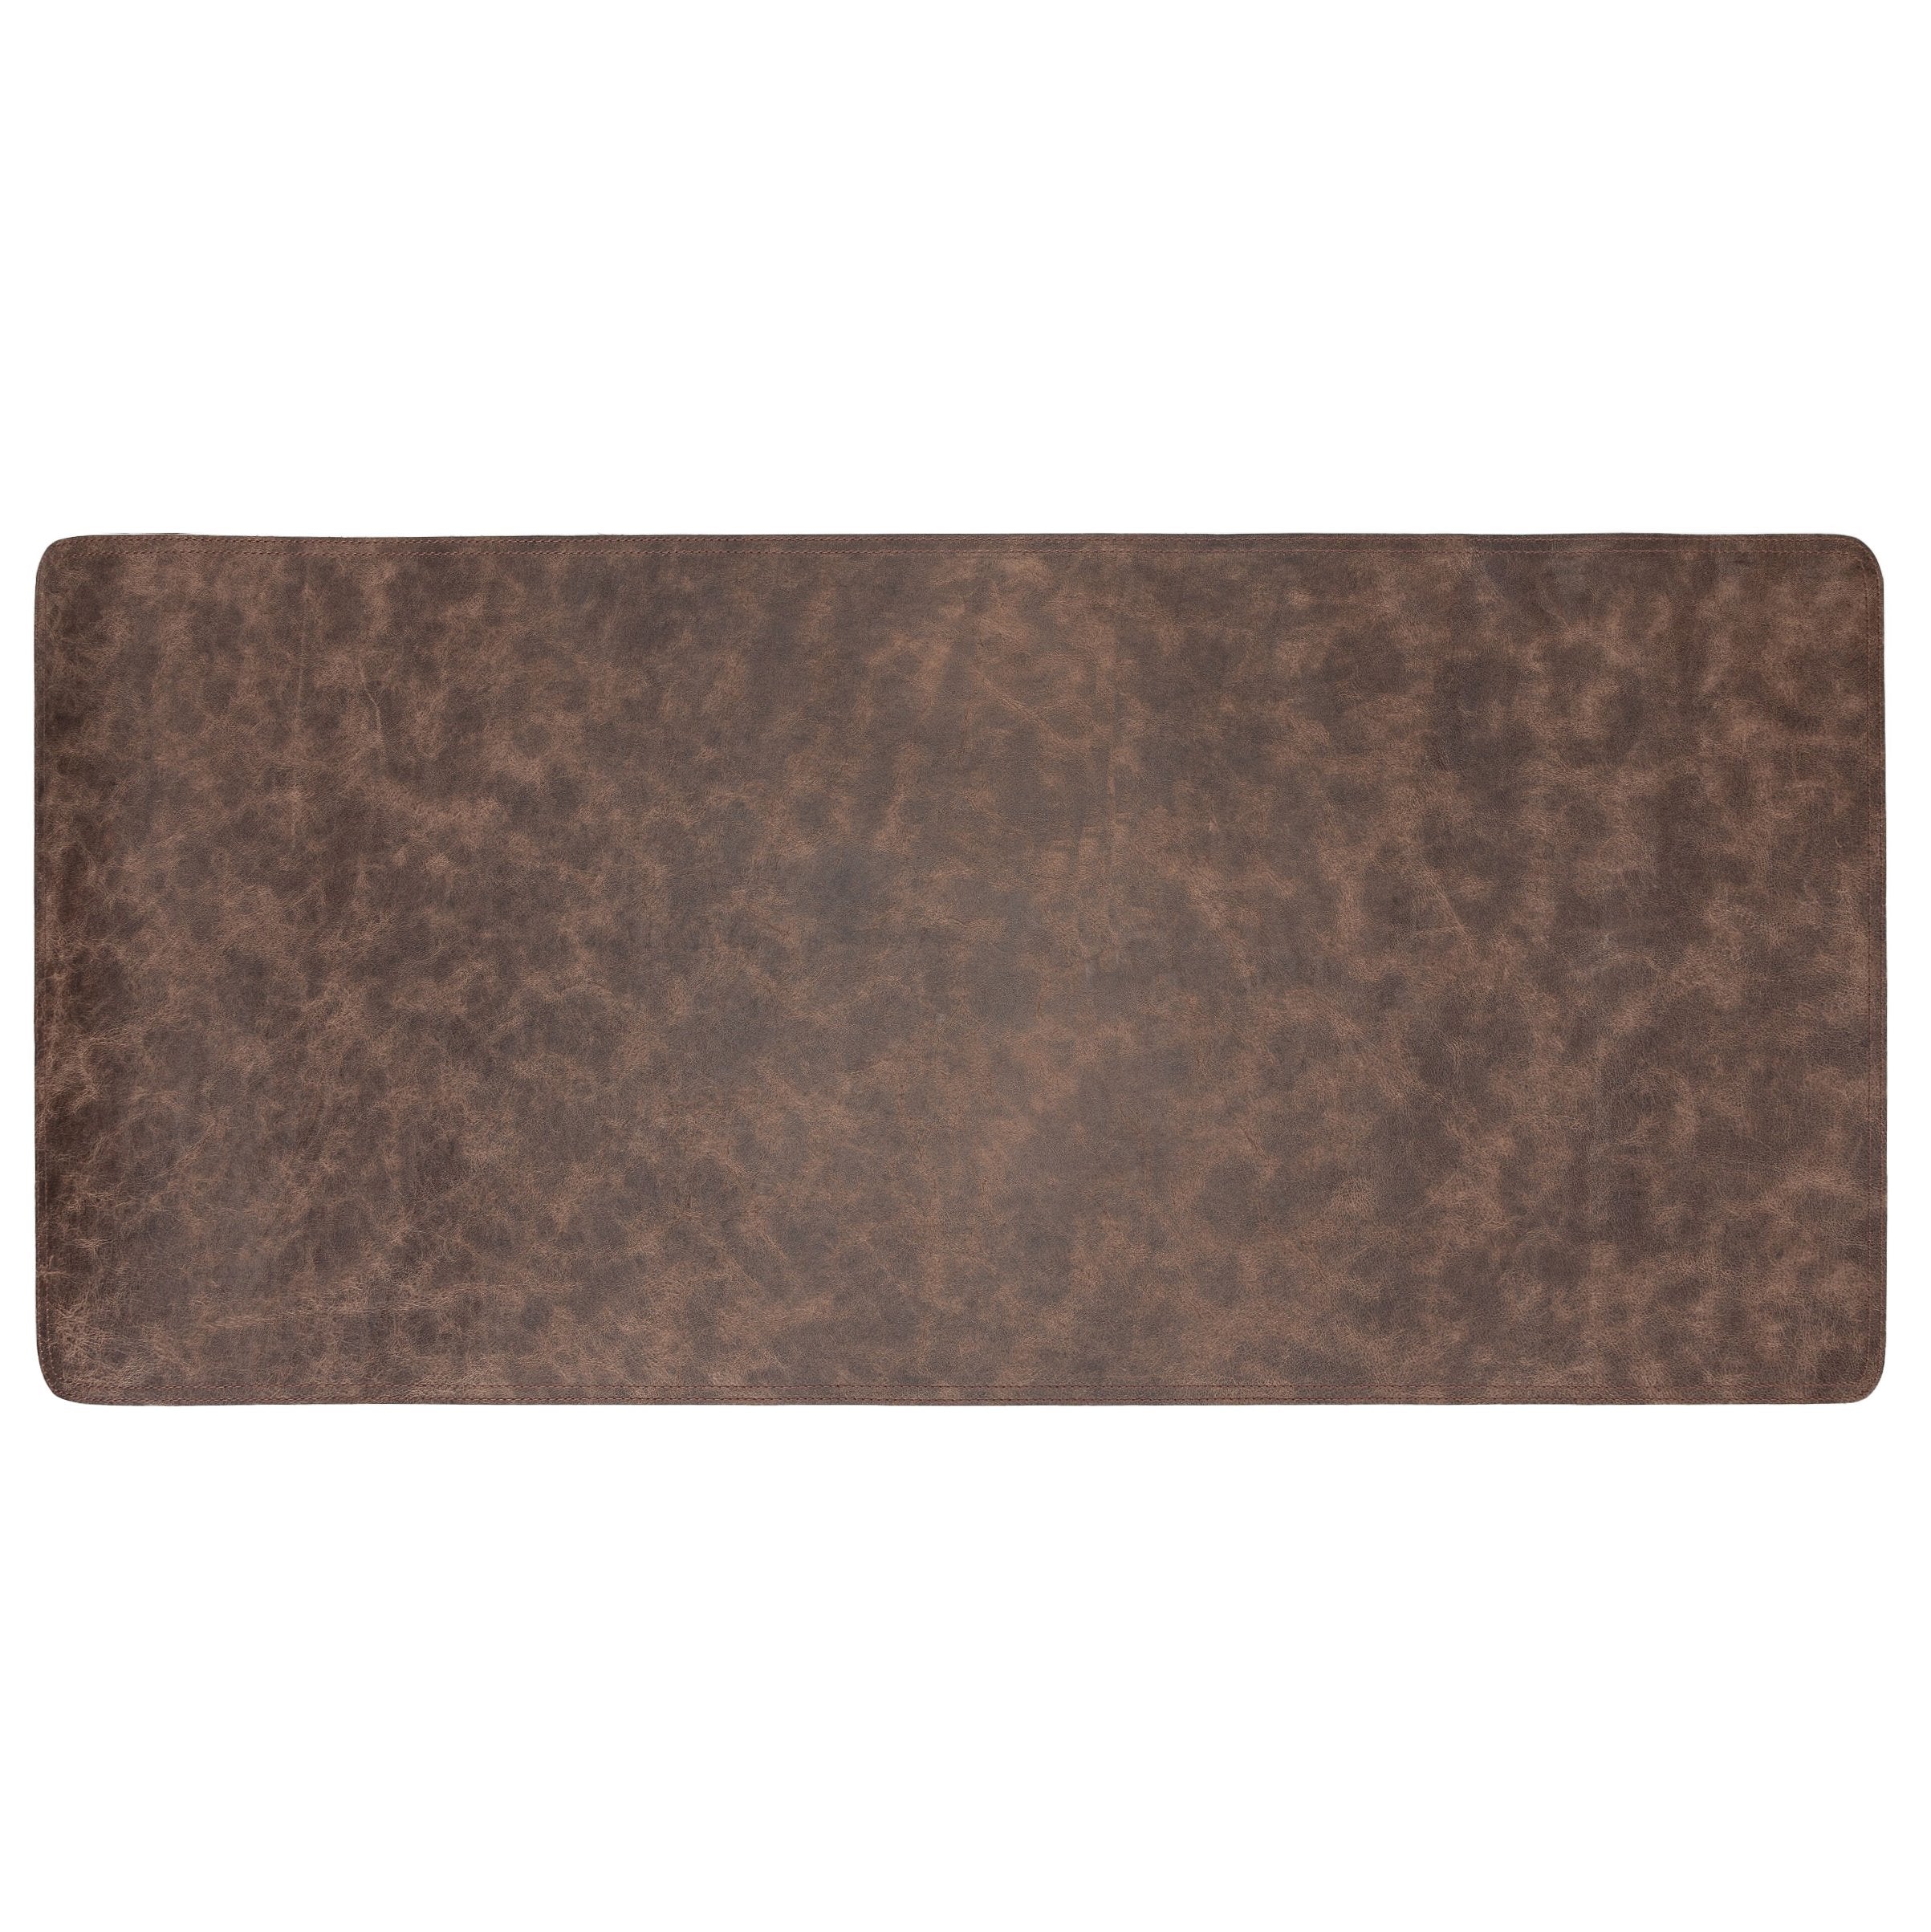 Leather Desk Mat - Non-Slip Desk Pad Bayelon